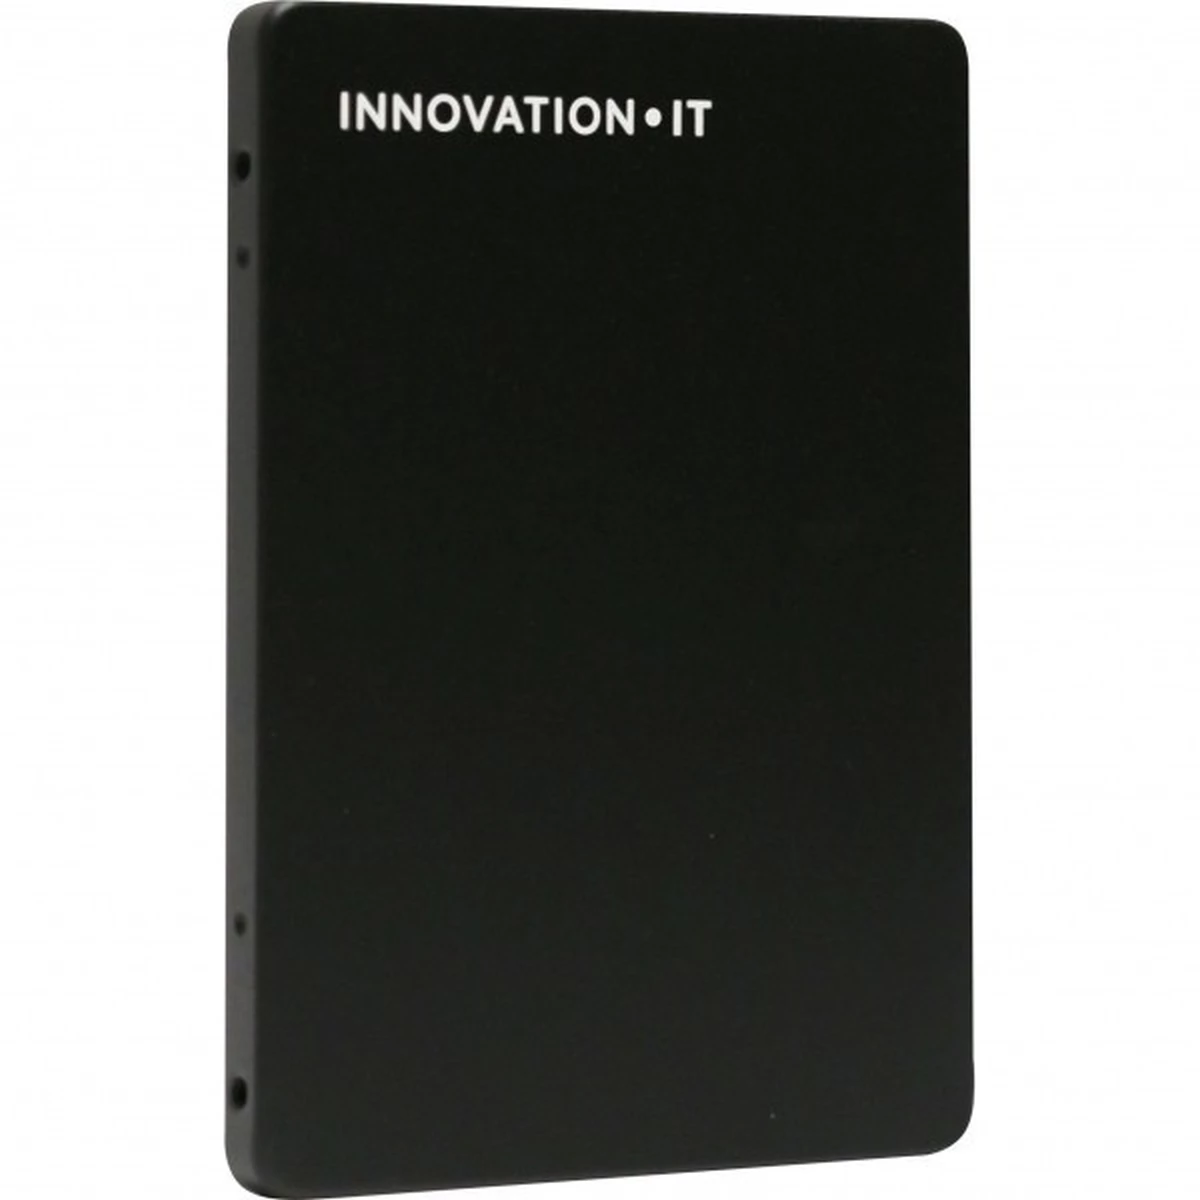 SSD 2.5“ 256GB InnovationIT SuperiorY BULK